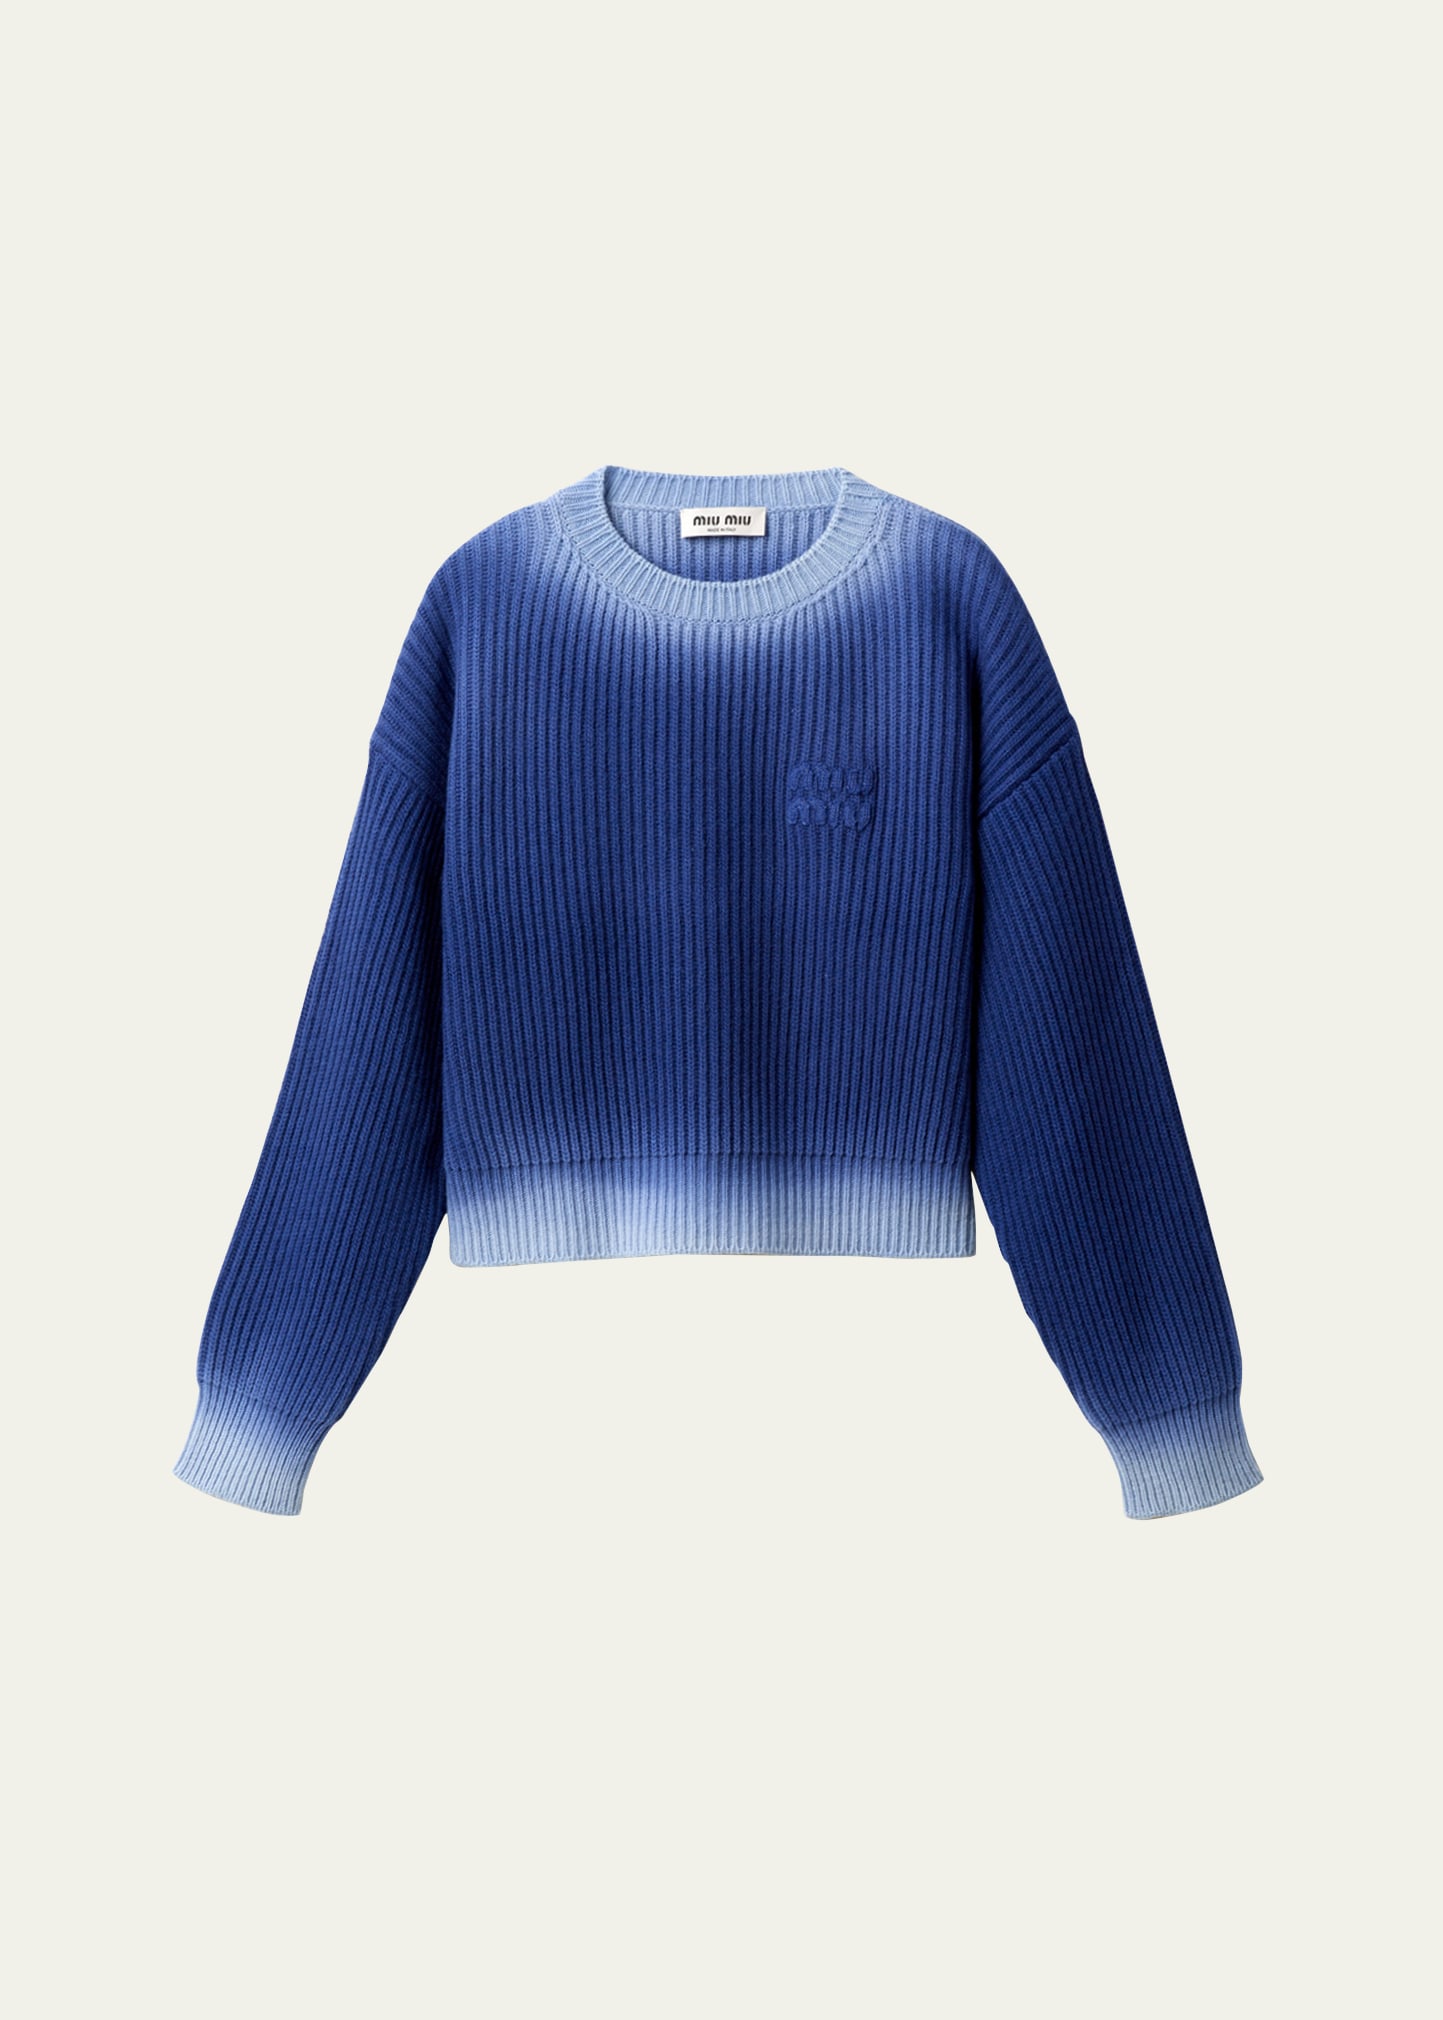 Miu Miu Wool Sweater In Indigo Blue